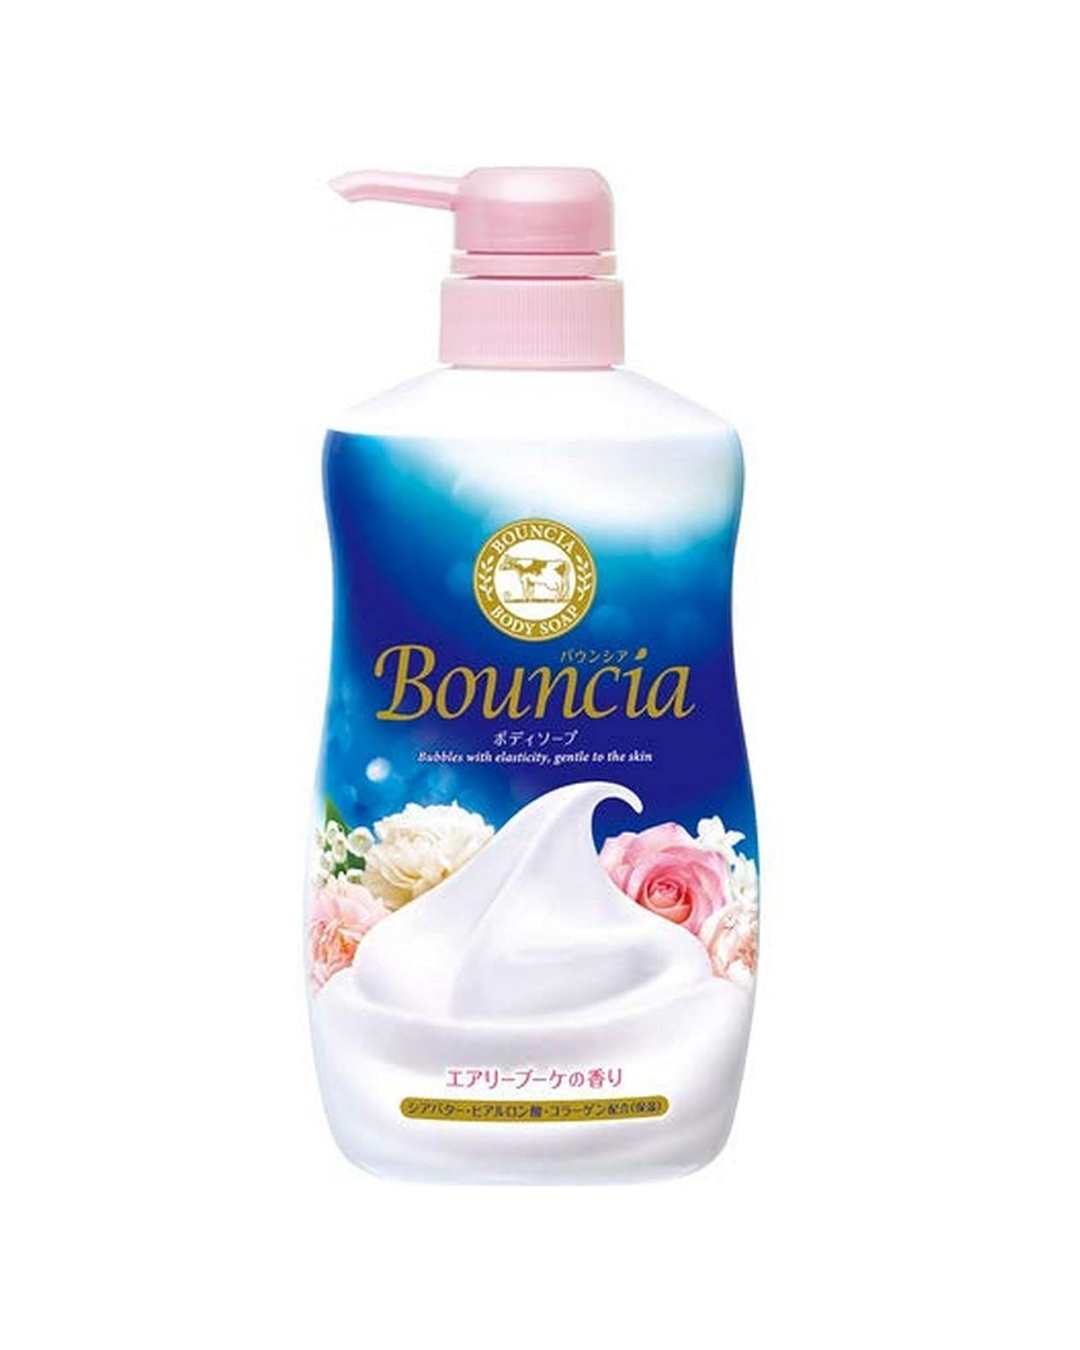 COW BRAND Bouncia Body Wash